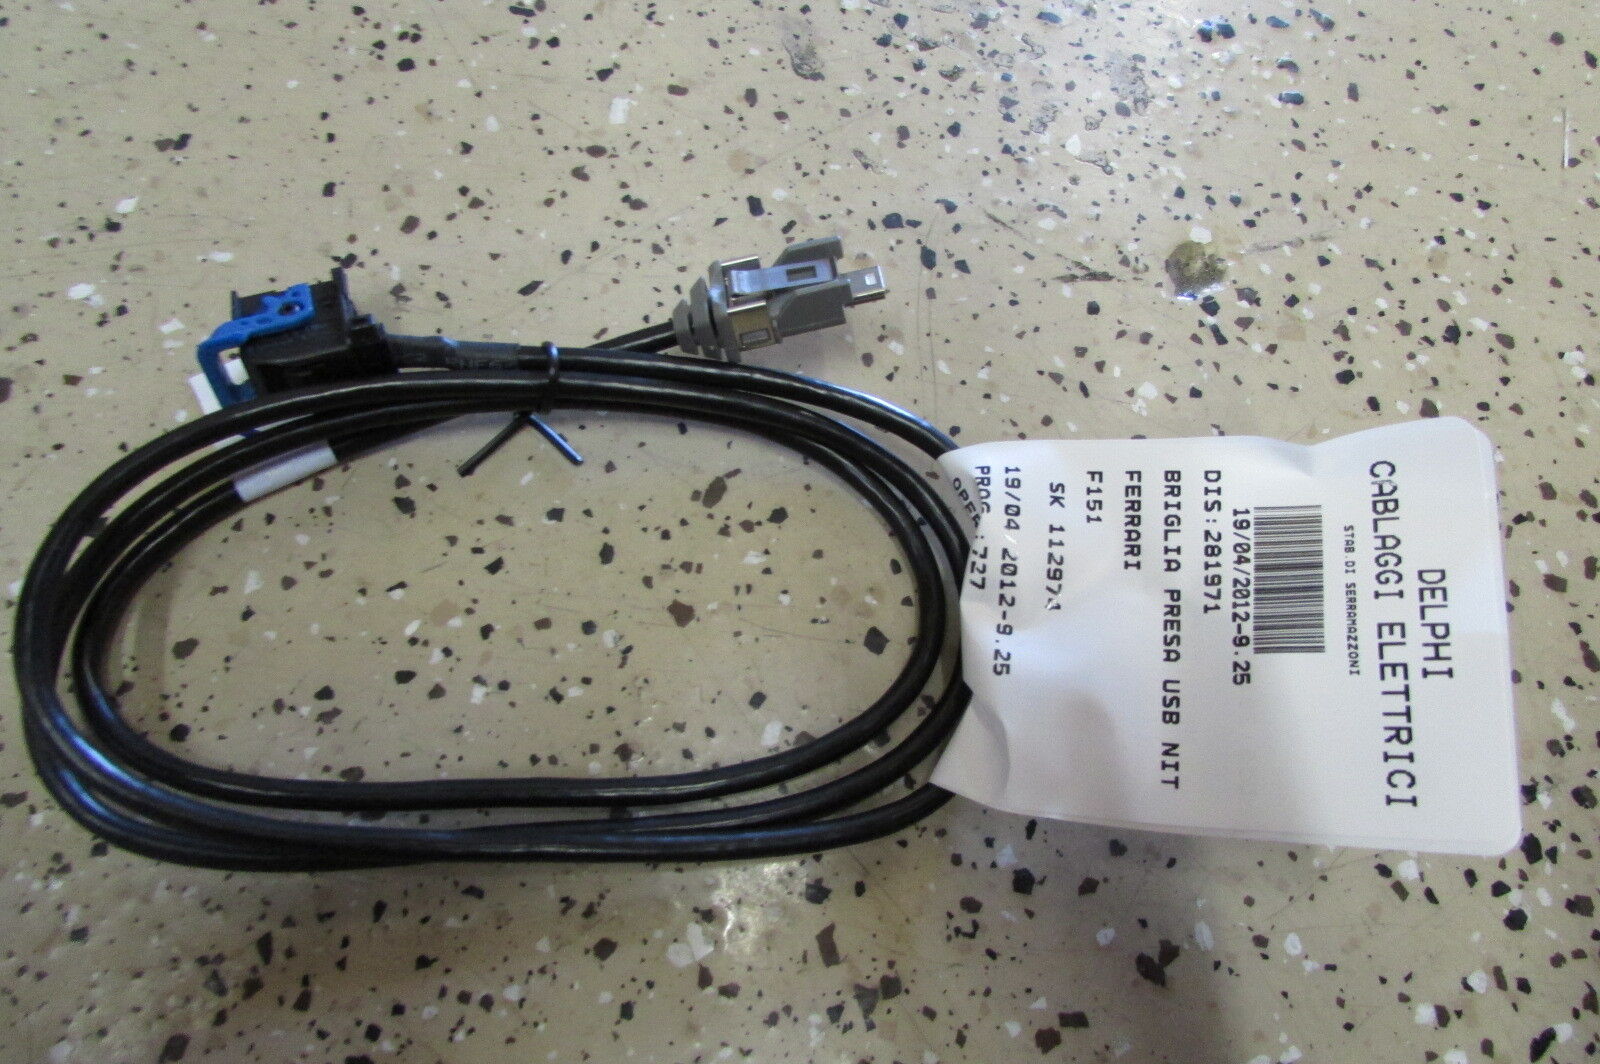 Ferrari FF, Radio Nit USB Cable, New, P/N 281971